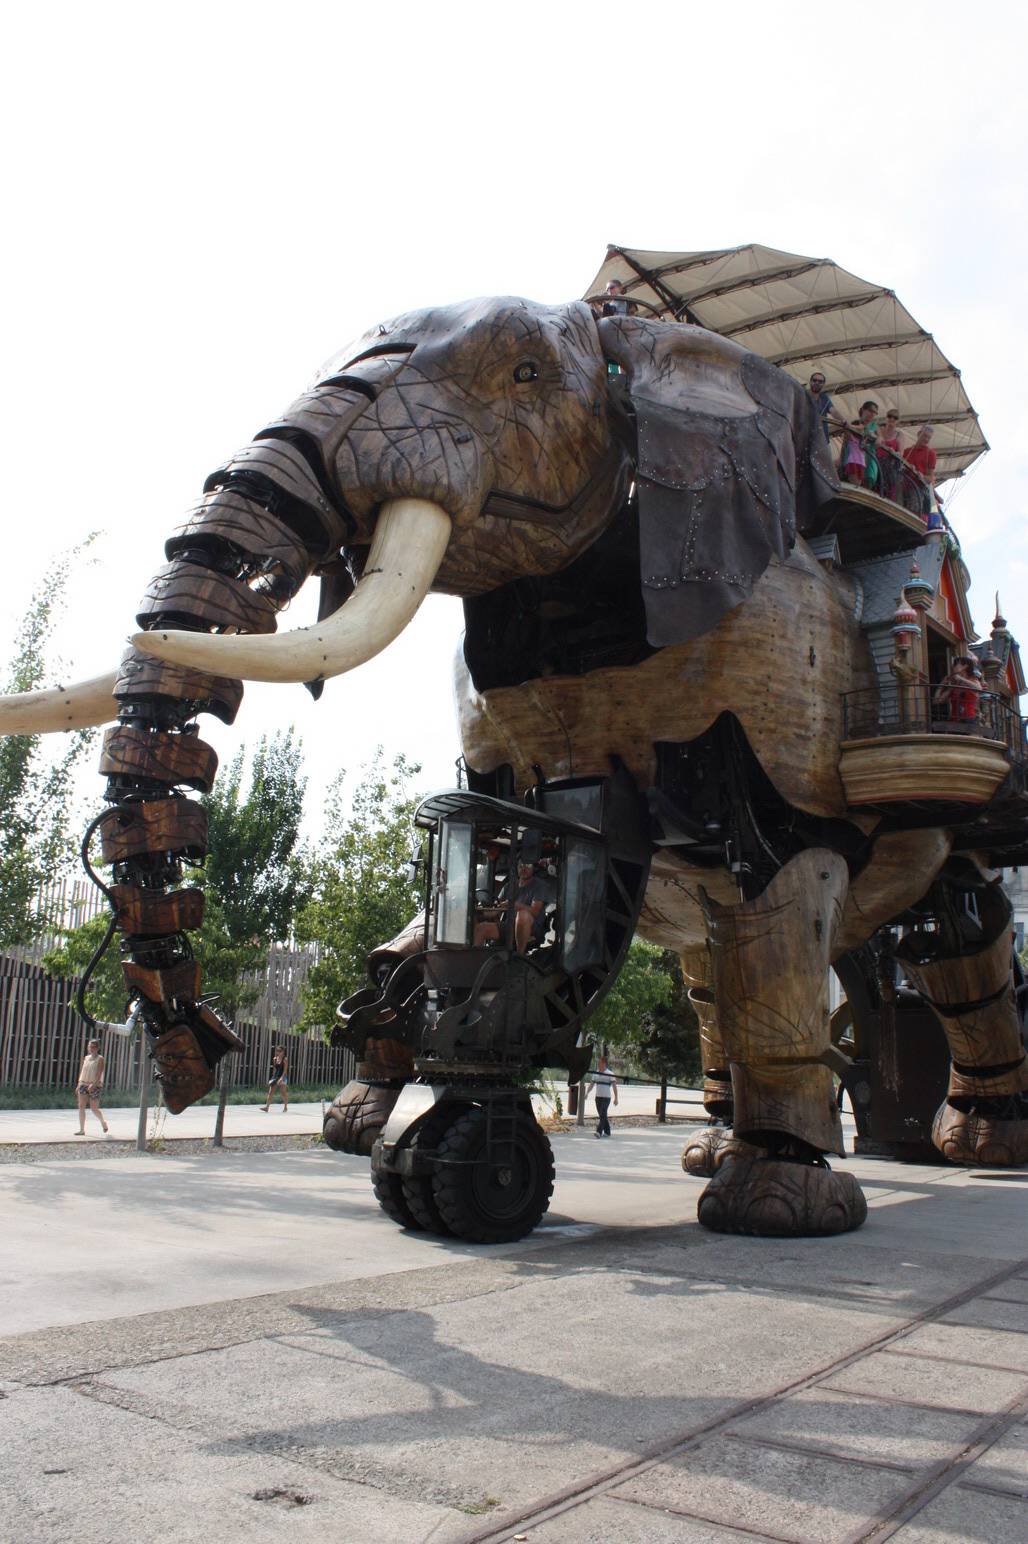 Le Grand Elephant - скульптура Большого слона во Франции